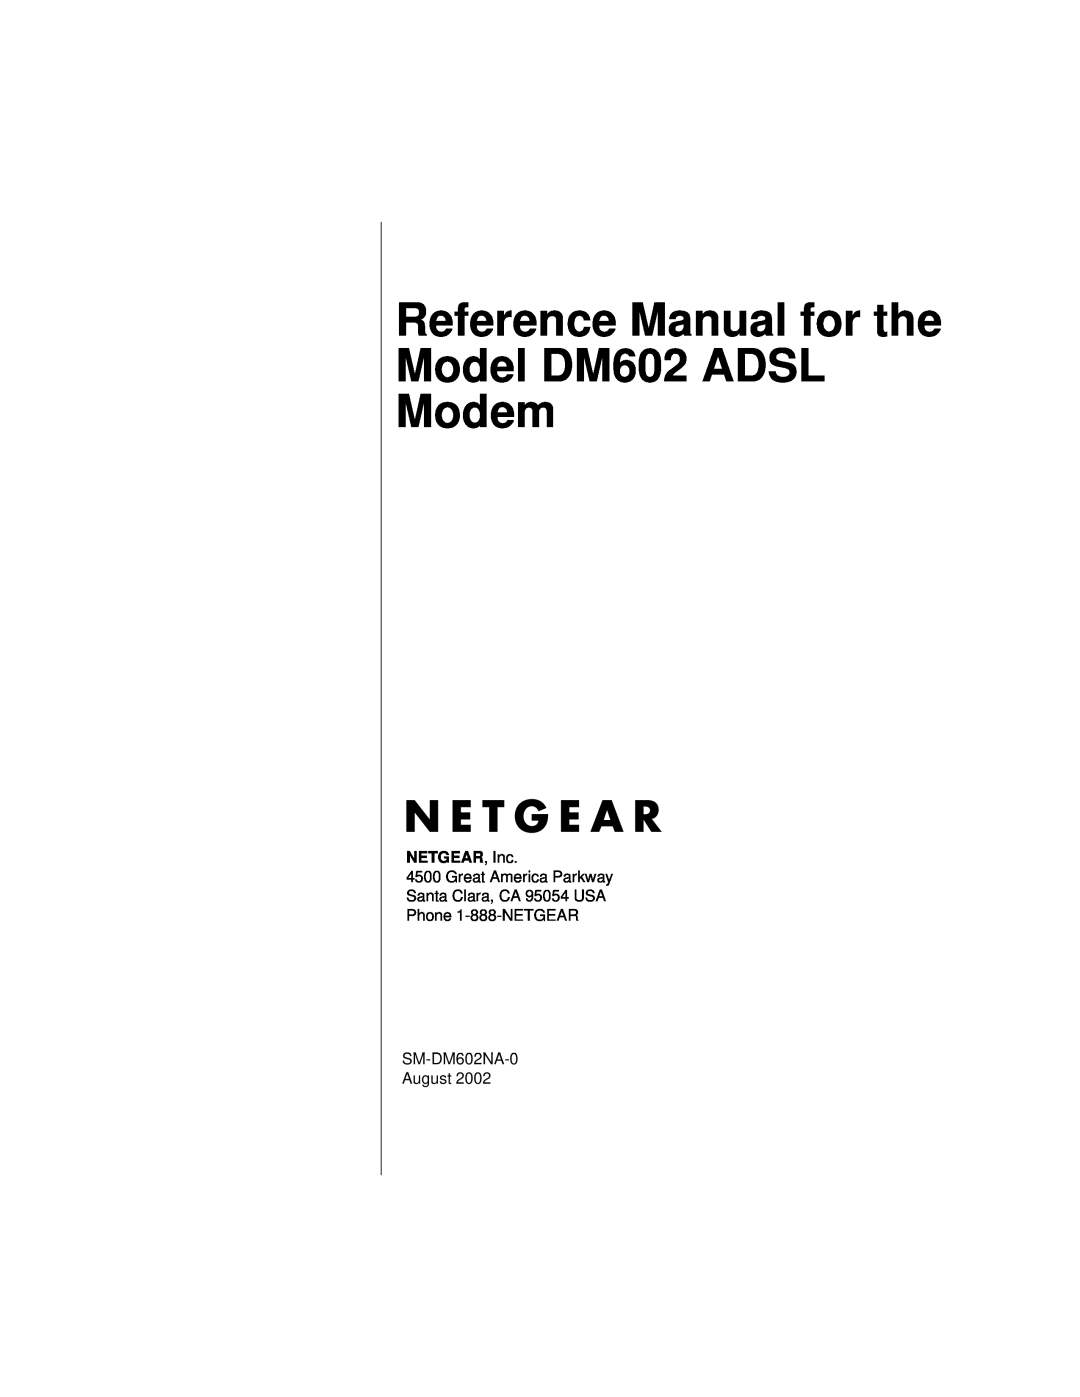 NETGEAR manual Reference Manual for the Model DM602 ADSL Modem, NETGEAR, Inc 